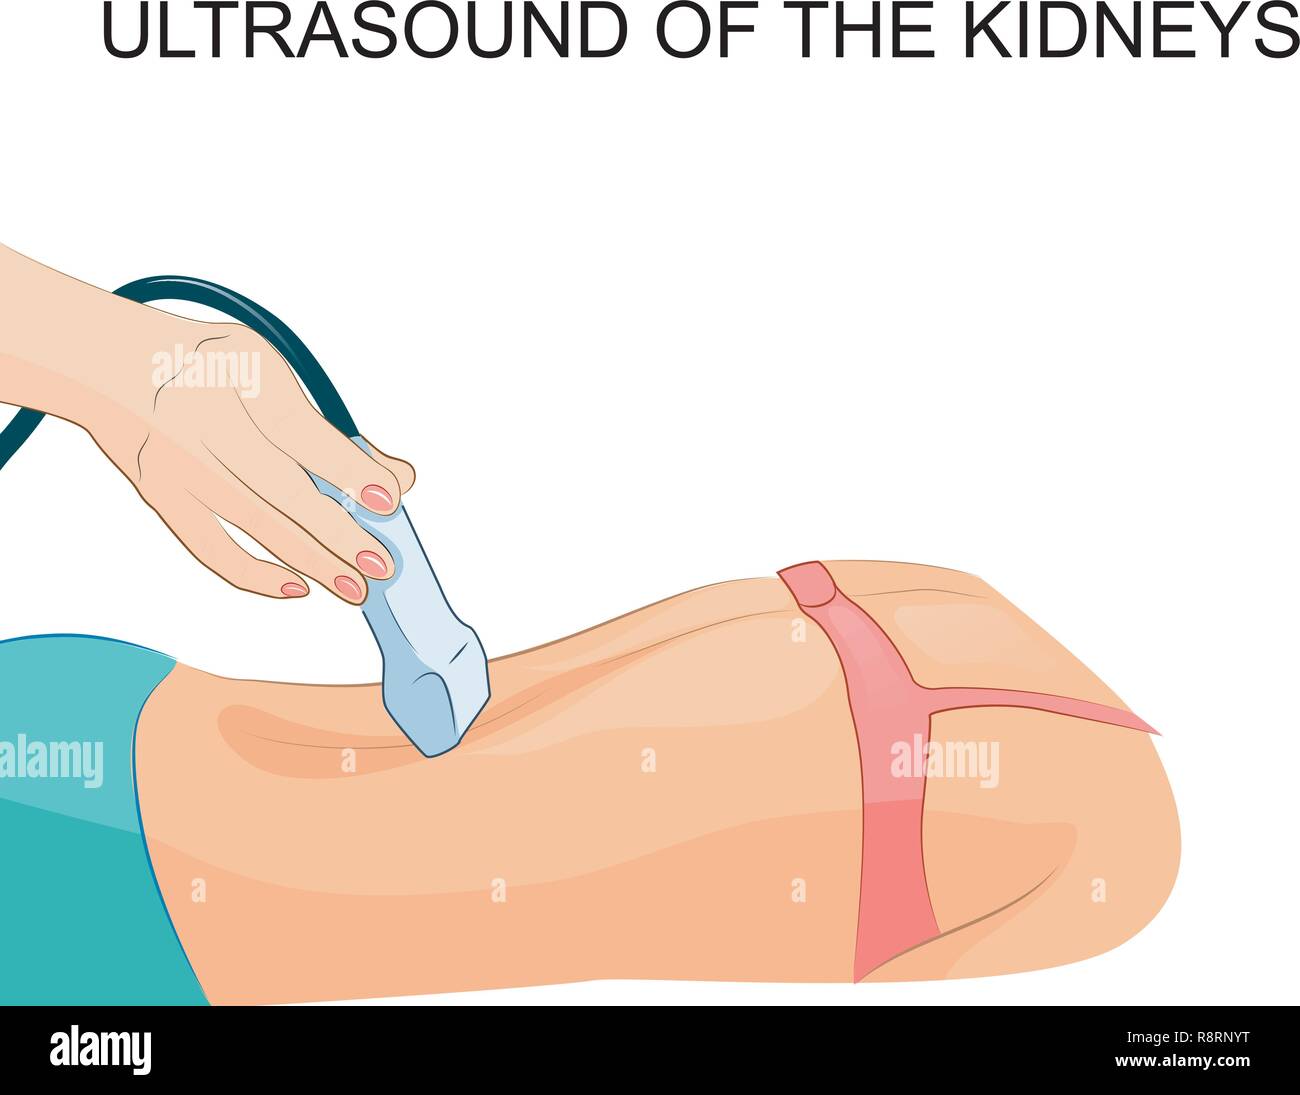 vector illustration of an ultrasound of the kidneys Stock Vector